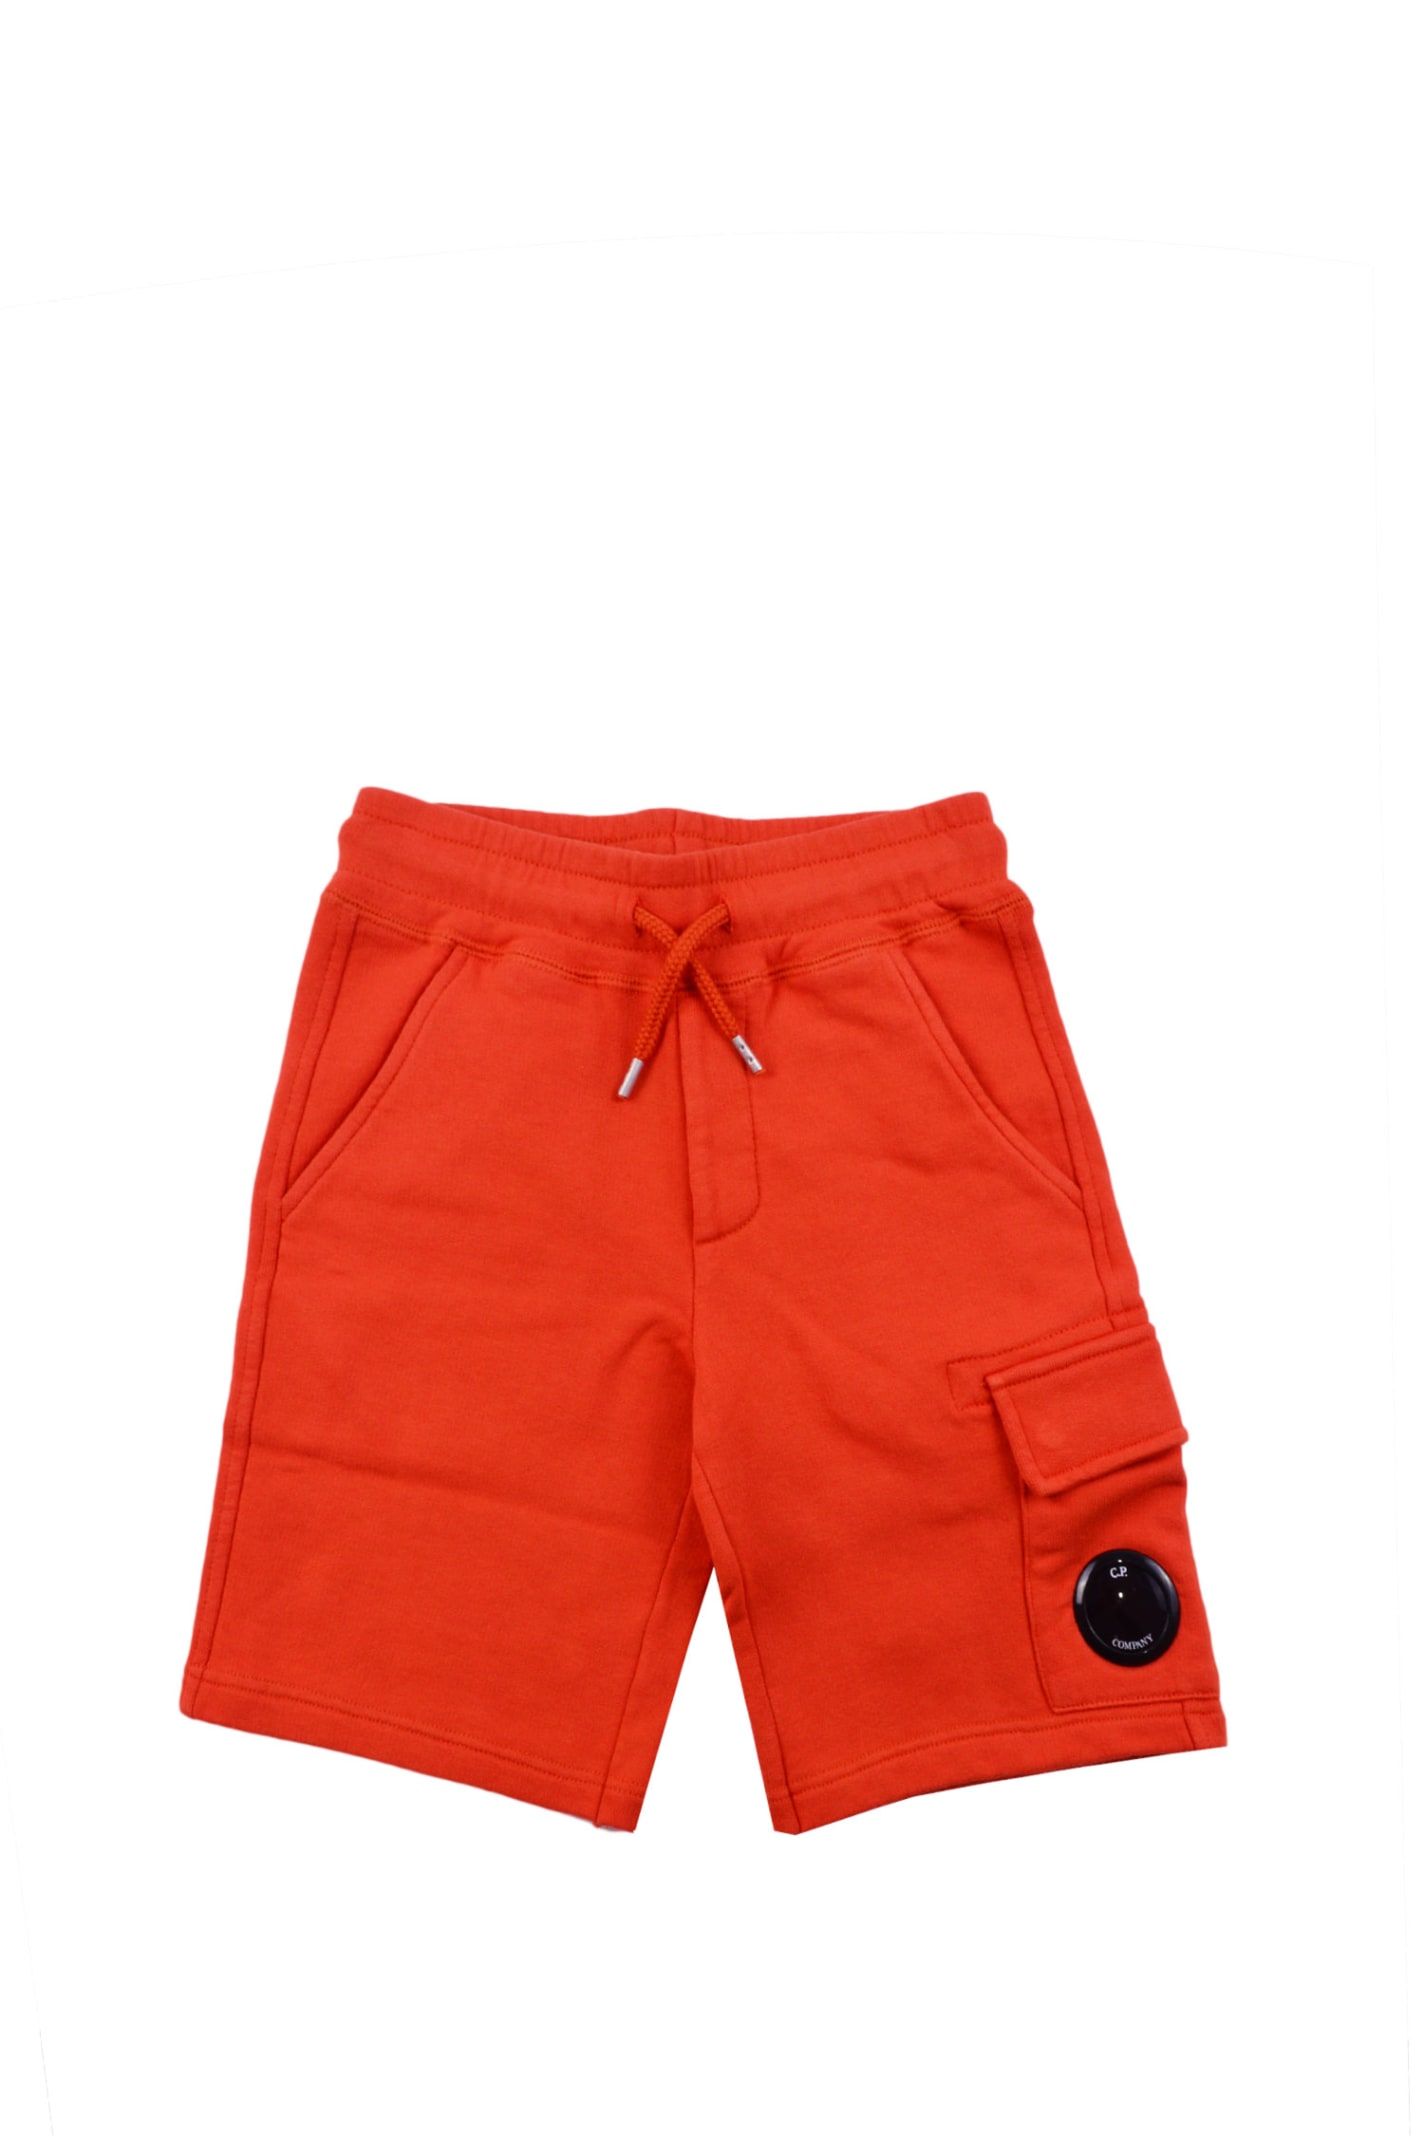 C.p. Company Kids' Cotton Shorts In Orange